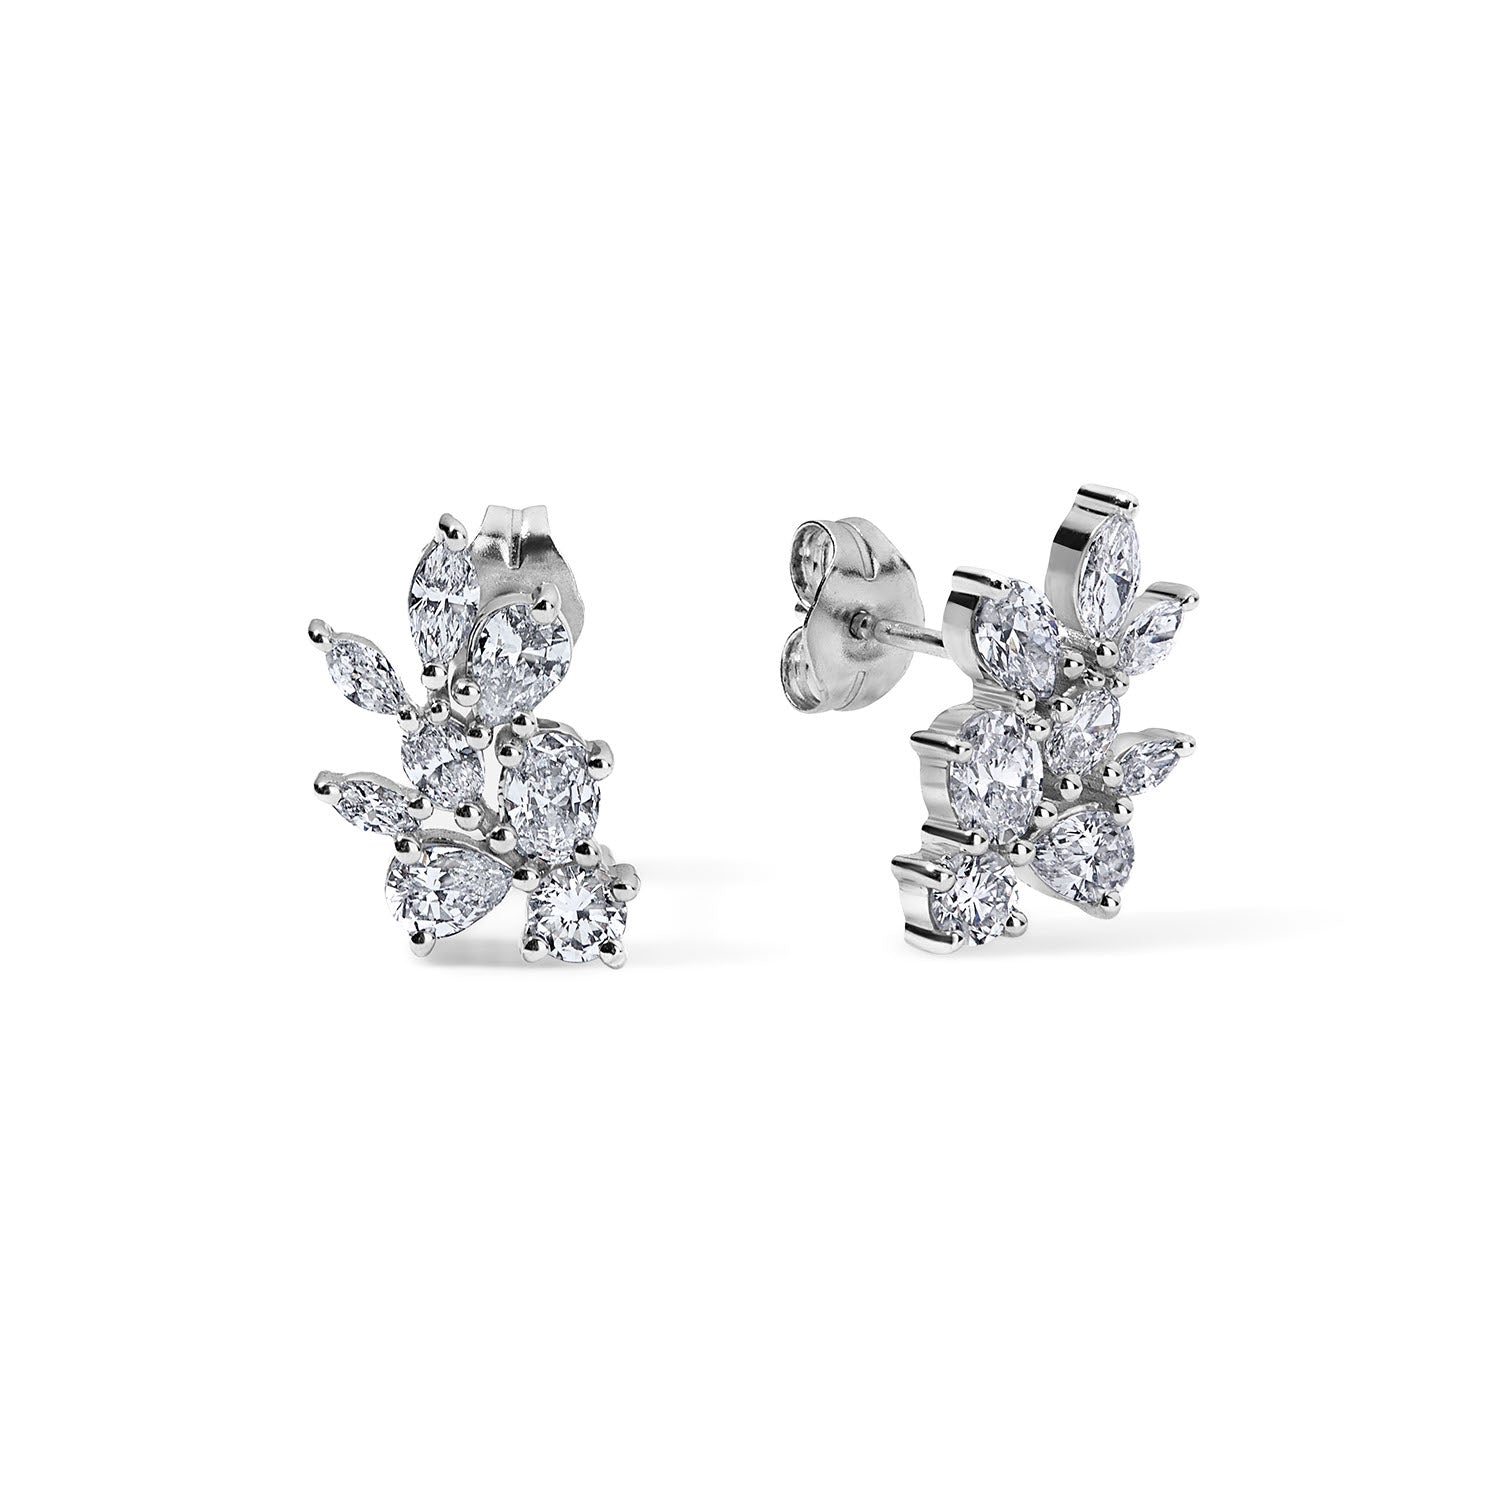 Mixed Shape Diamond Cluster Earrings